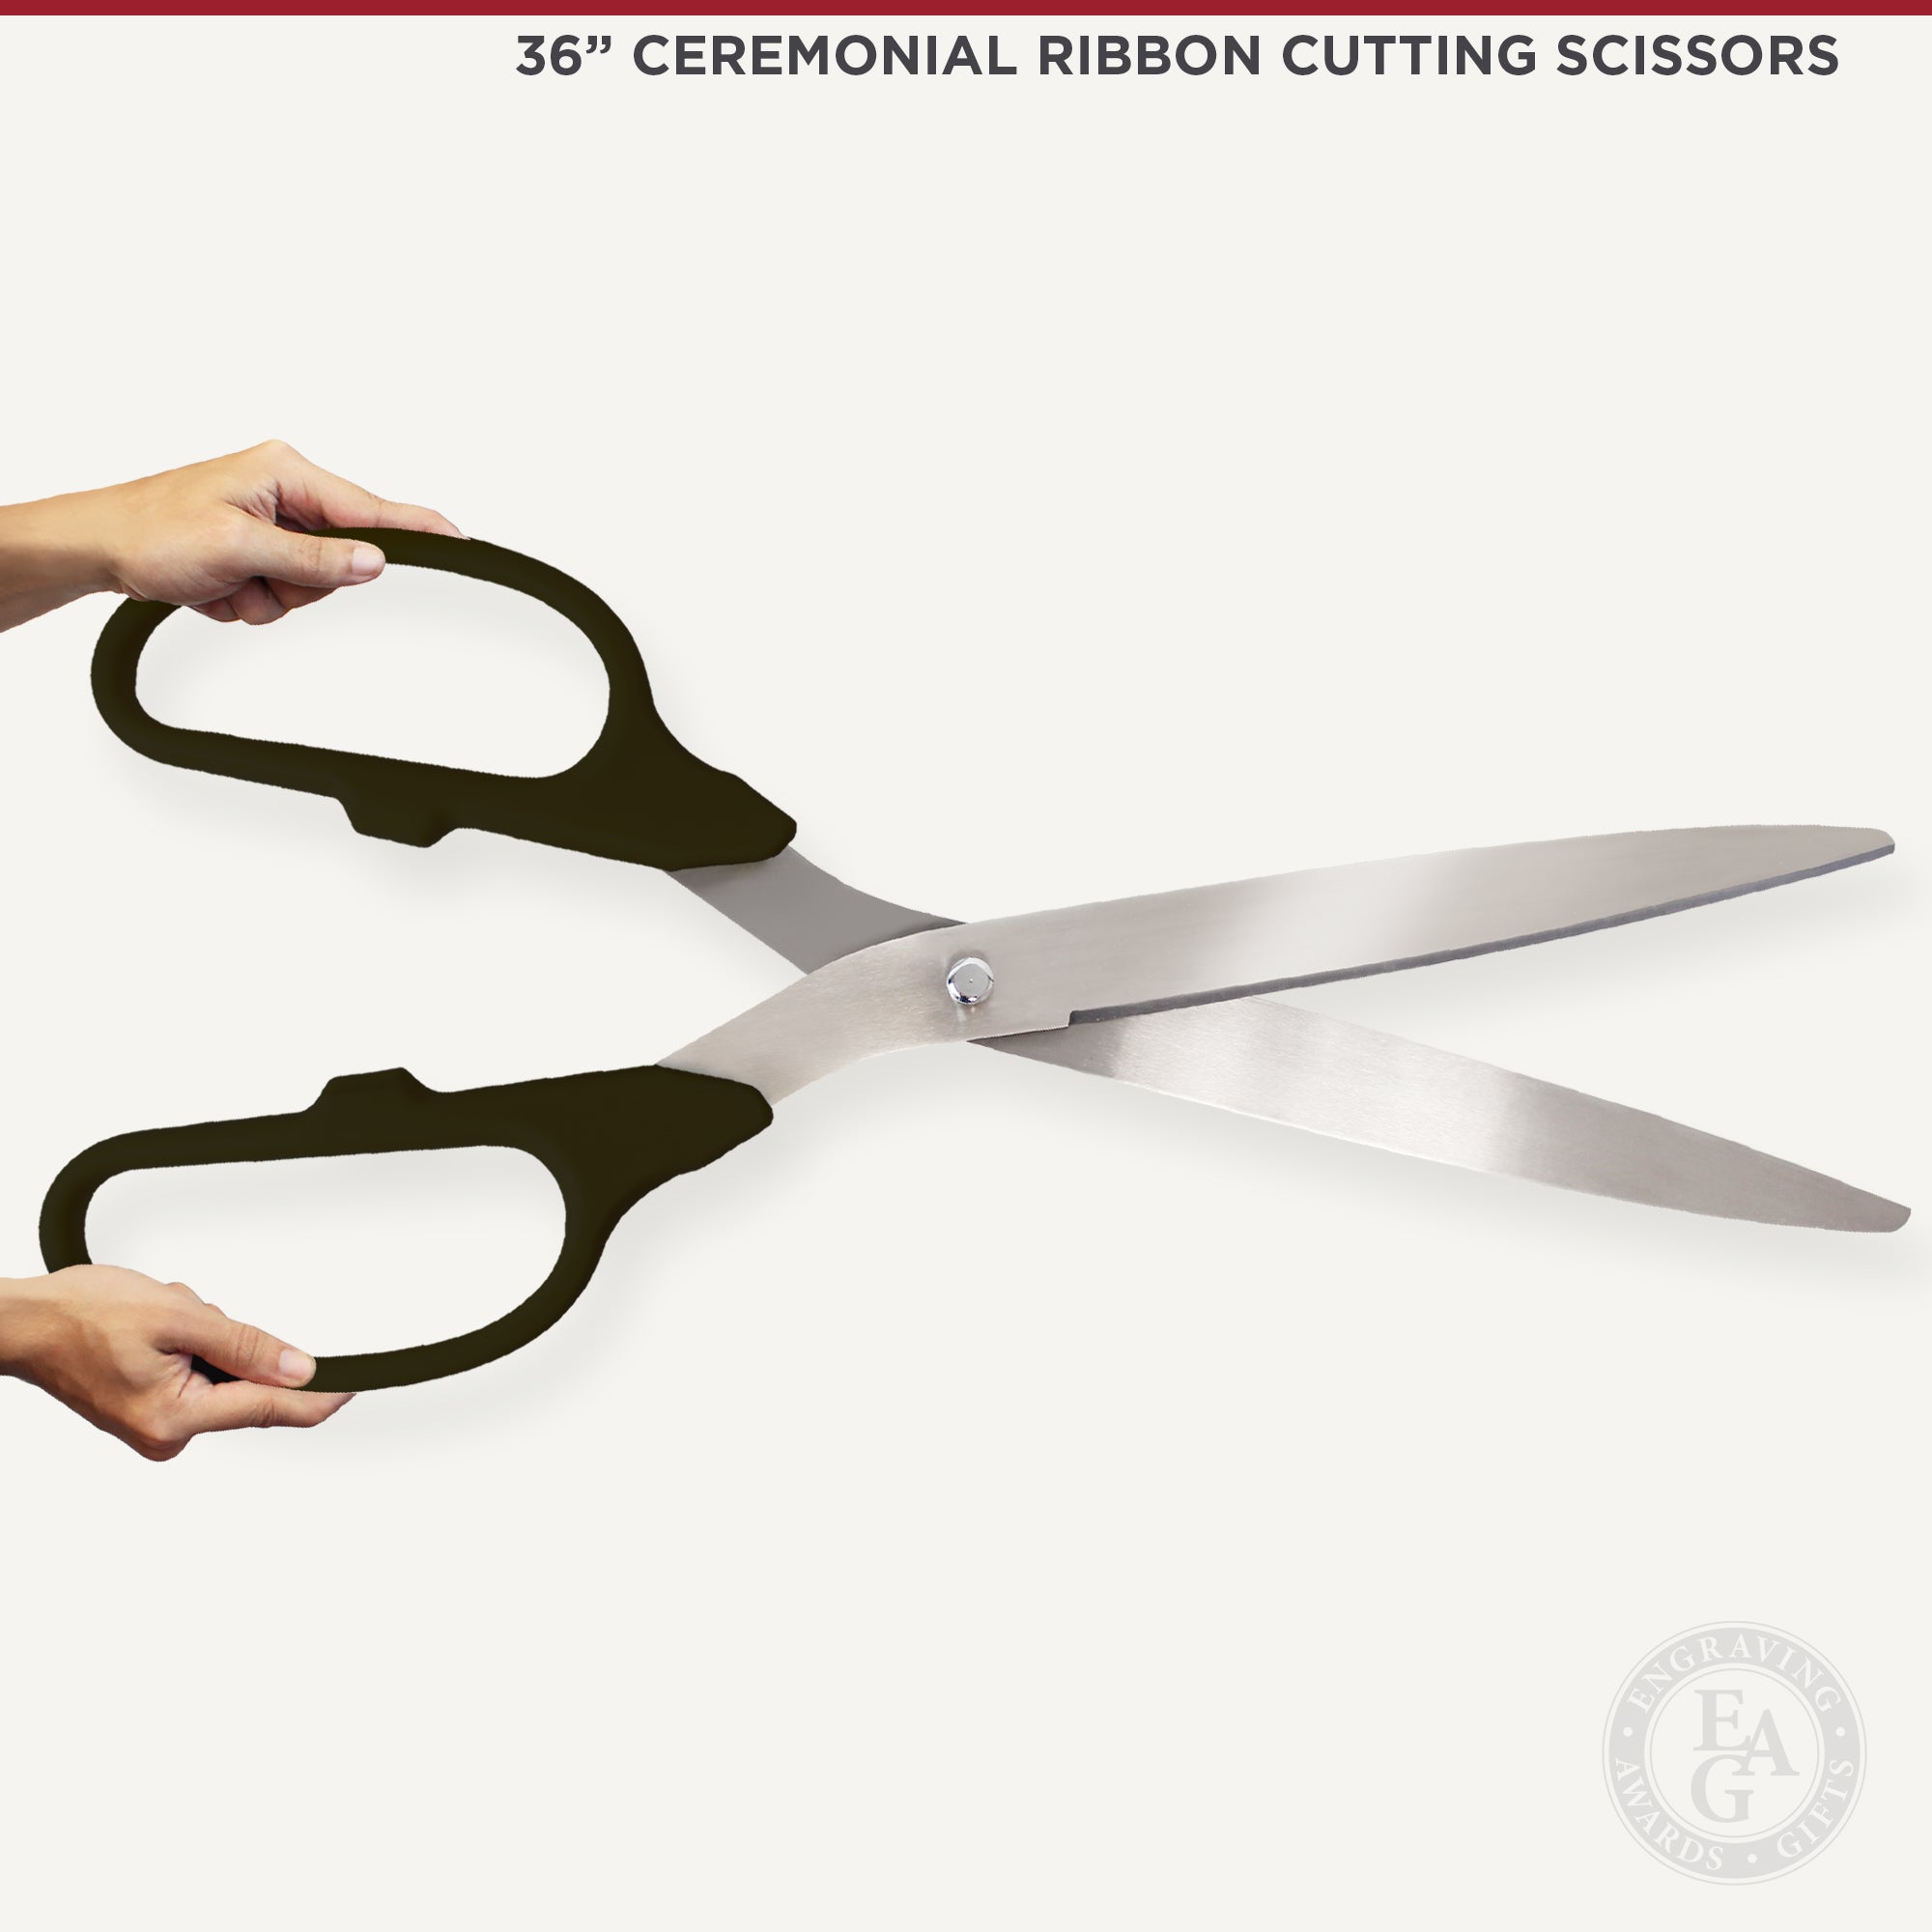 3 Foot Ceremonial Scissors - Black Handles